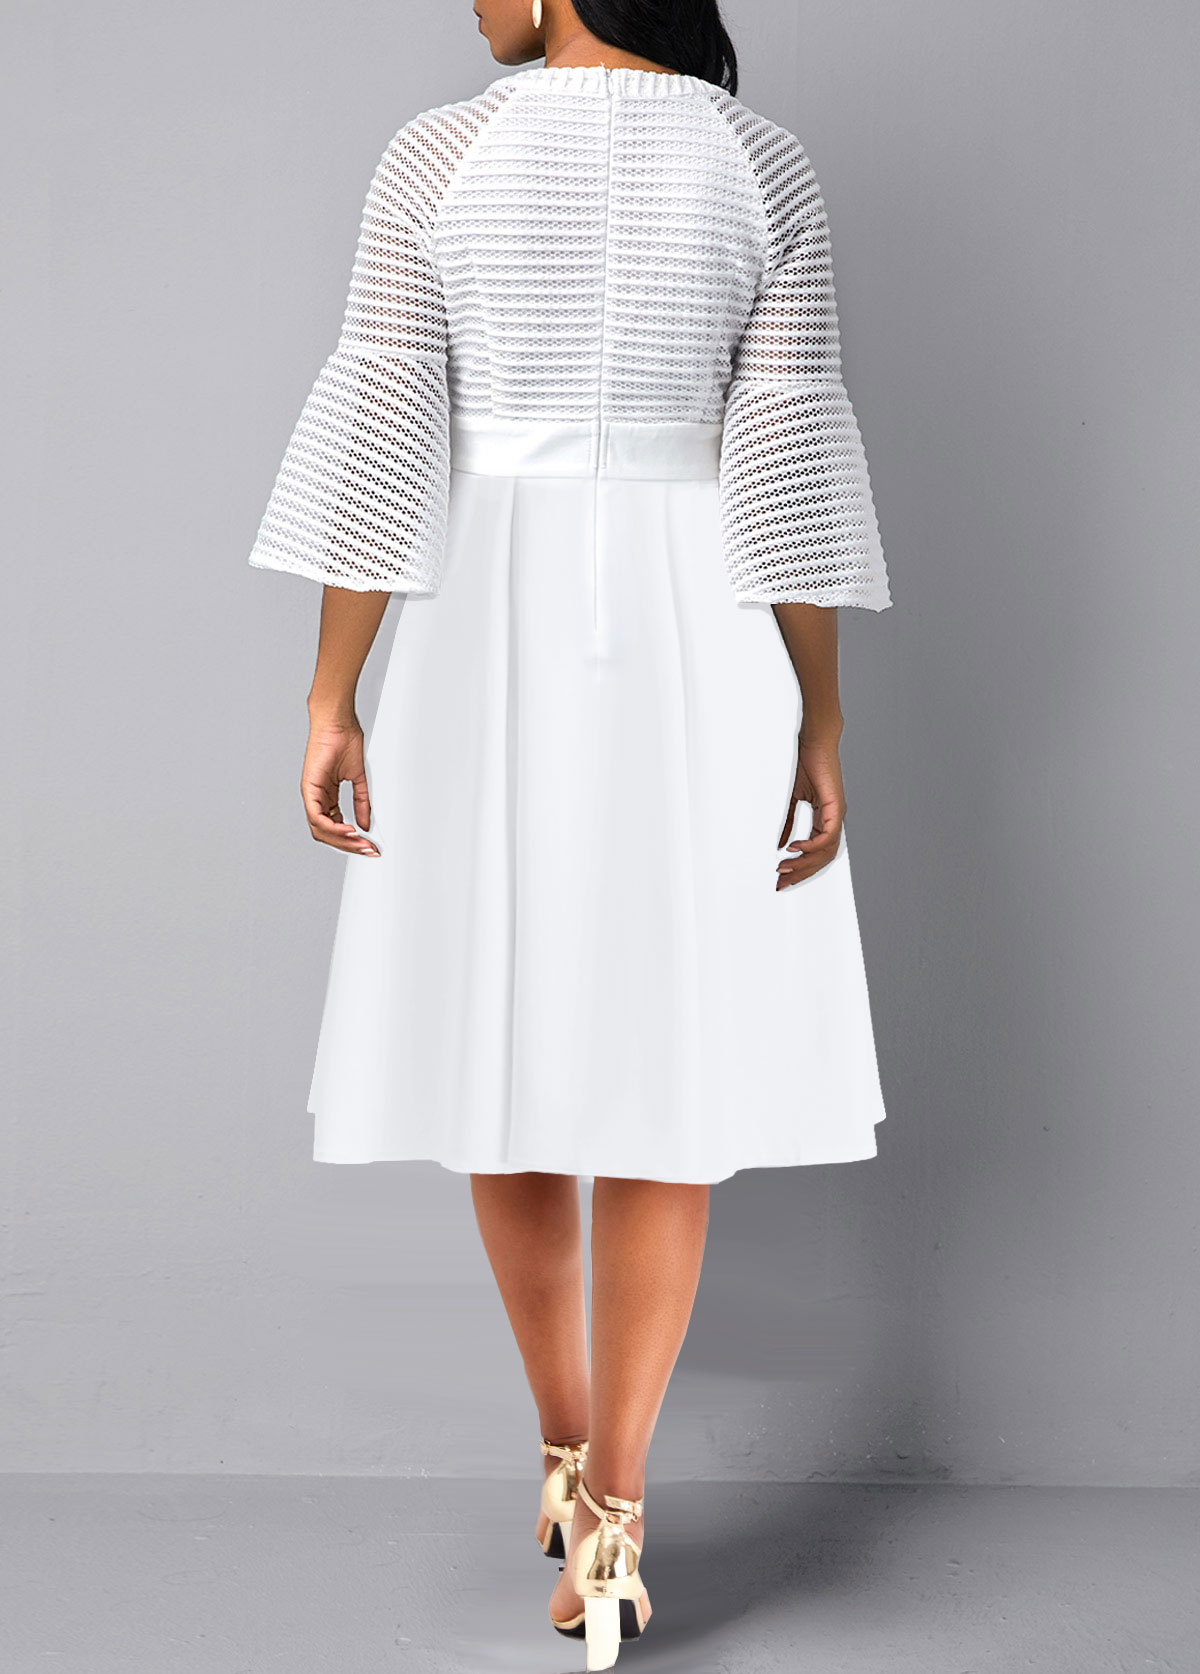 Three Quarter Length Sleeve Mesh White Round Neck Dress